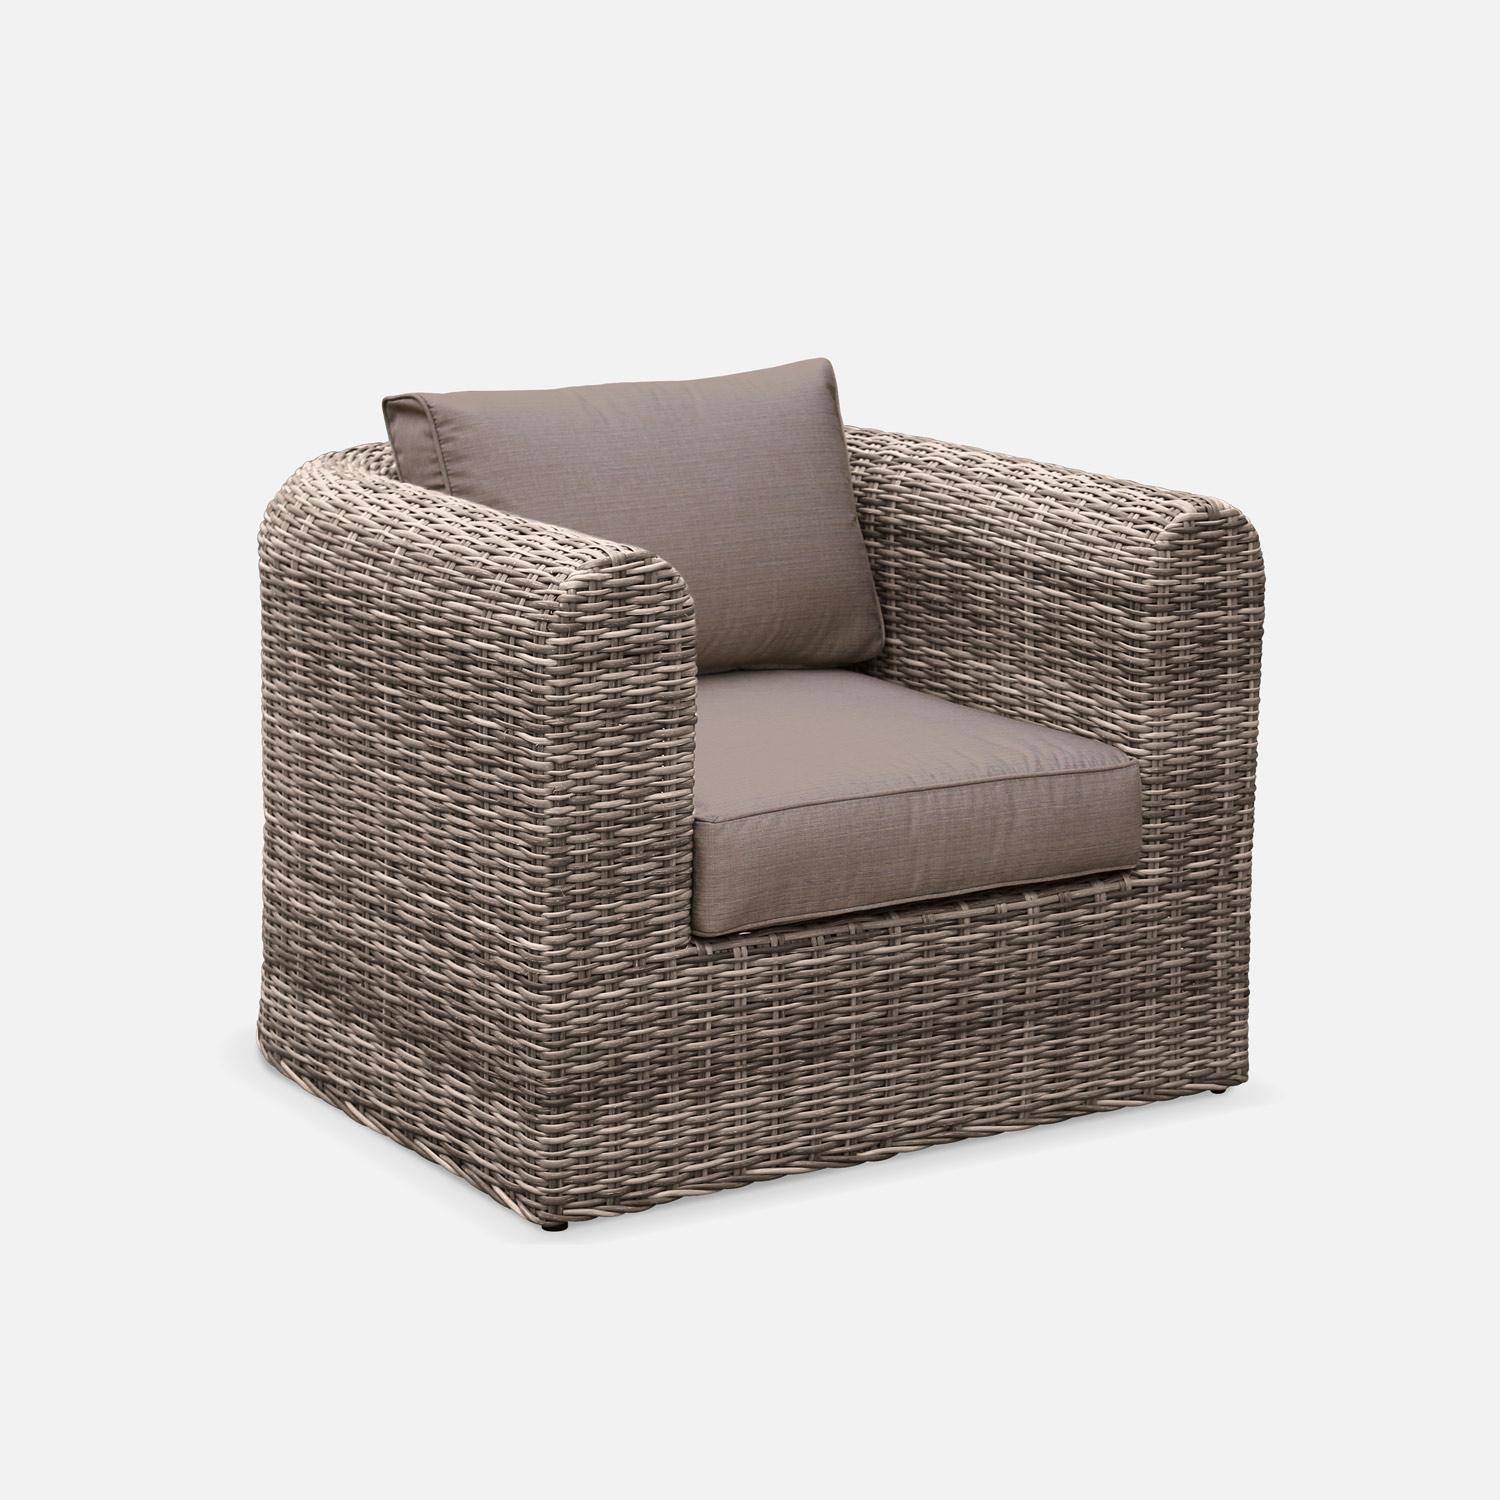 5-seater round rattan garden sofa set - 3-seater sofa, 2 armchairs, 1 coffee table - Juliano - Beige Photo3